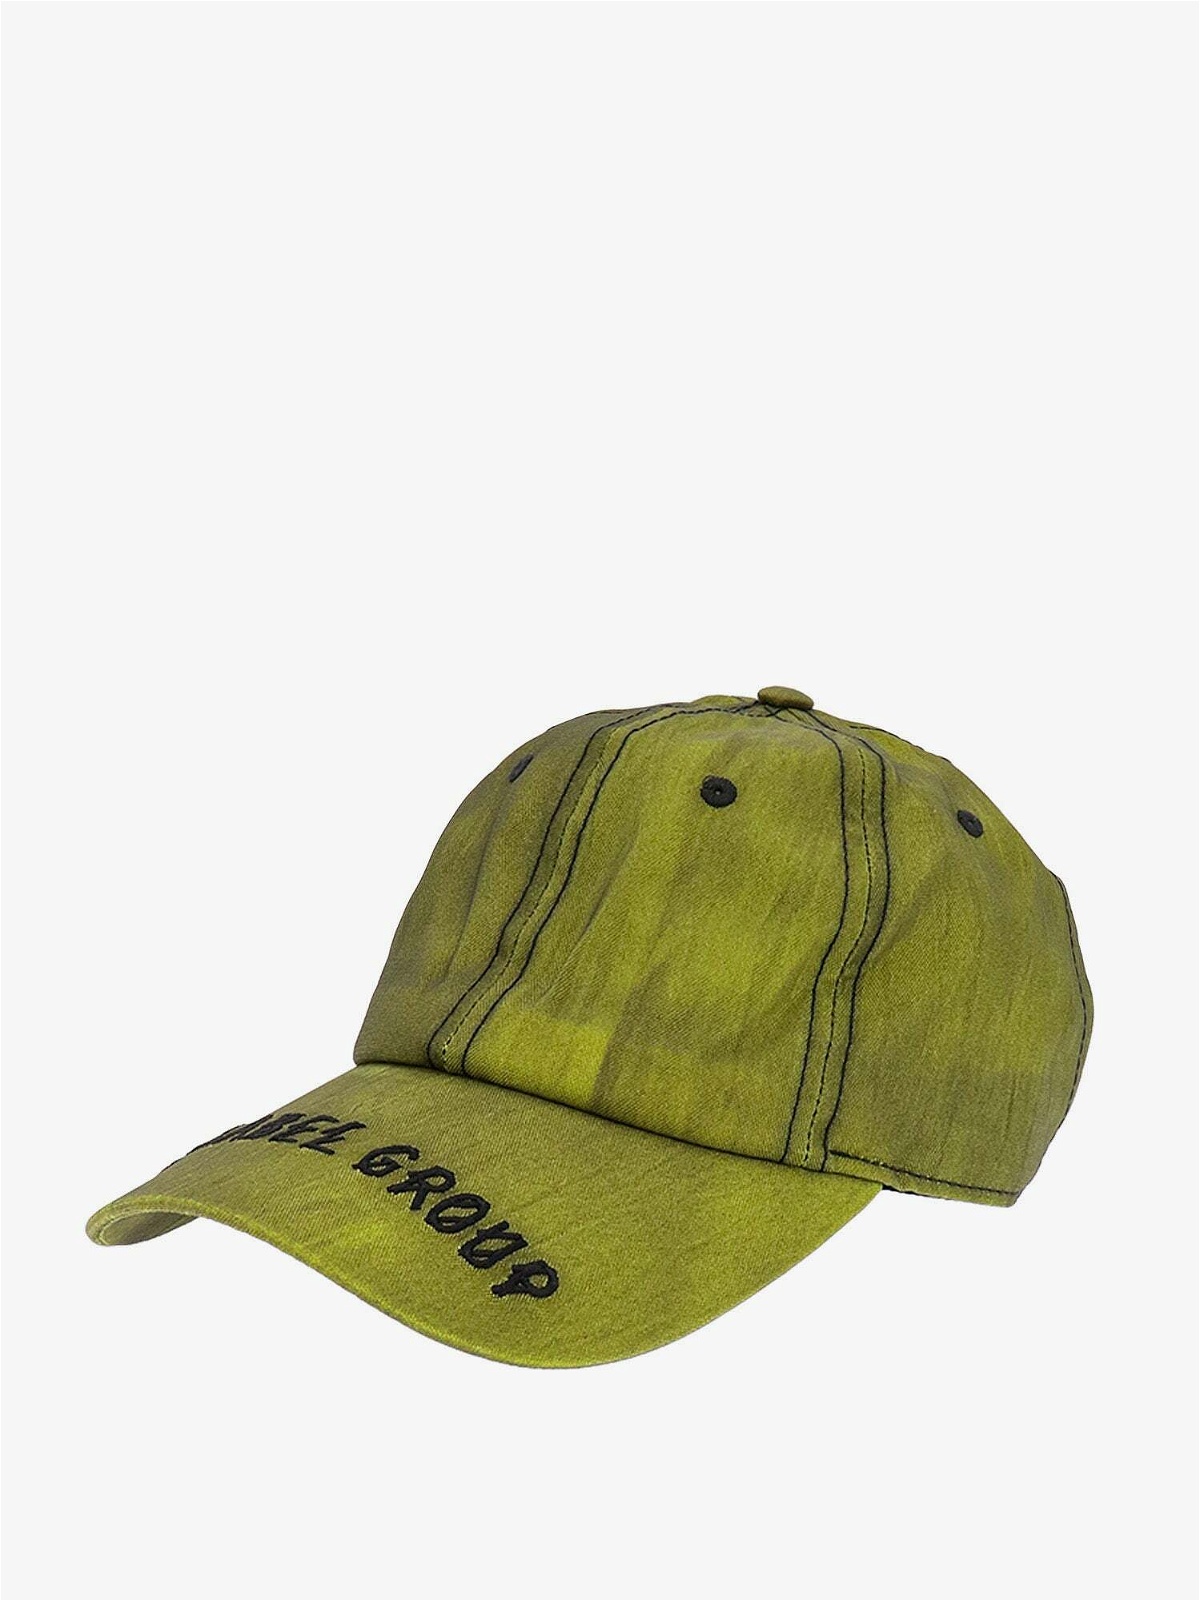 44 Label Group Hat Green   Mens